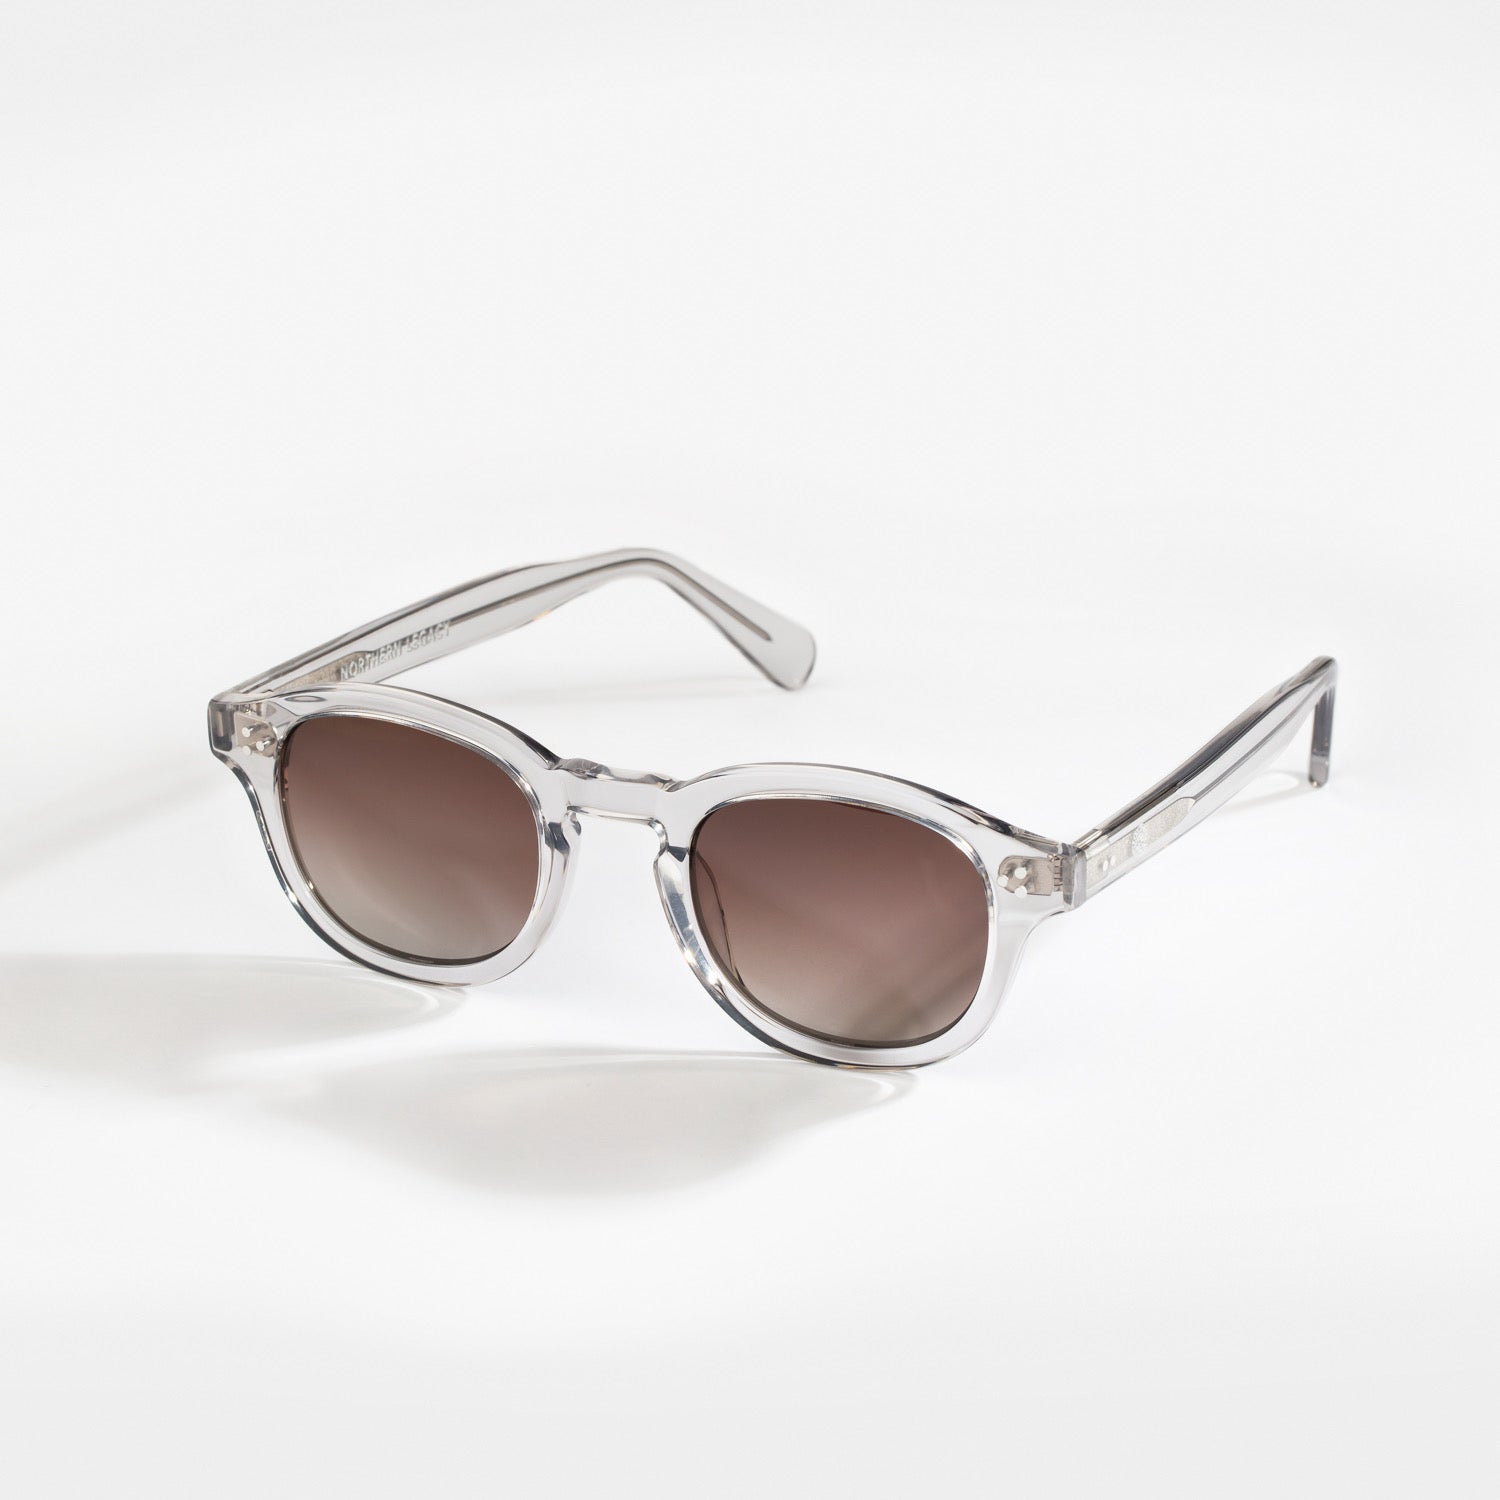 Legacy sunglasses - Transparent brown